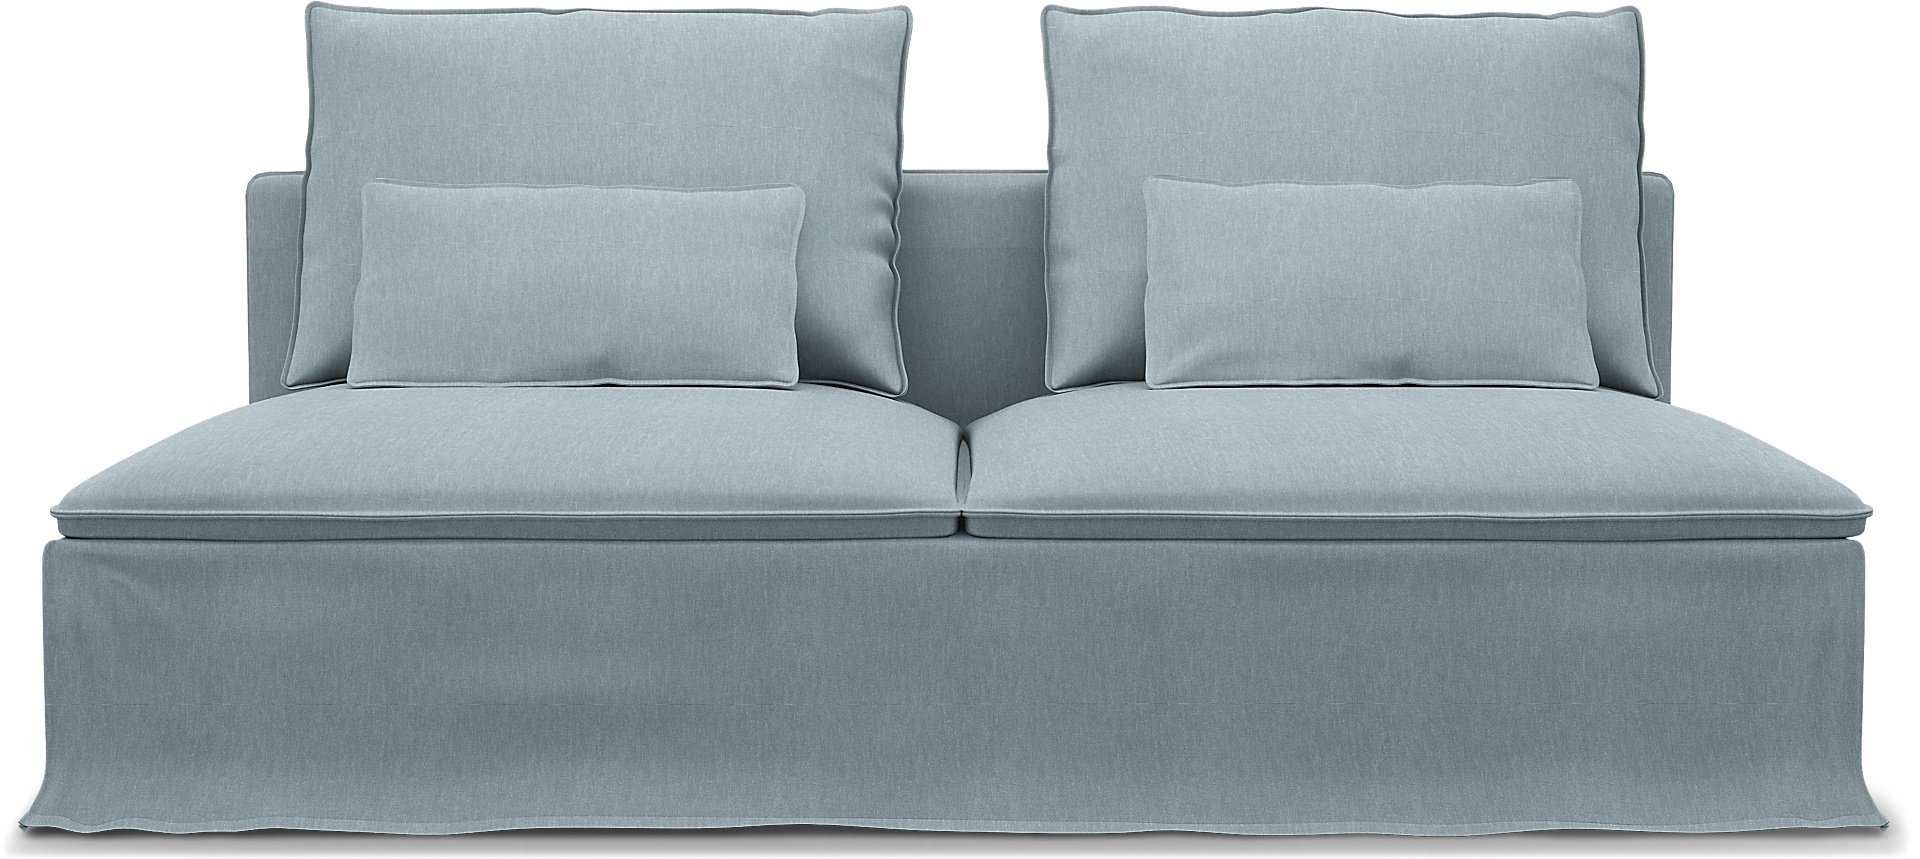 IKEA - Soderhamn 3 Seat Section Cover, Dusty Blue, Linen - Bemz